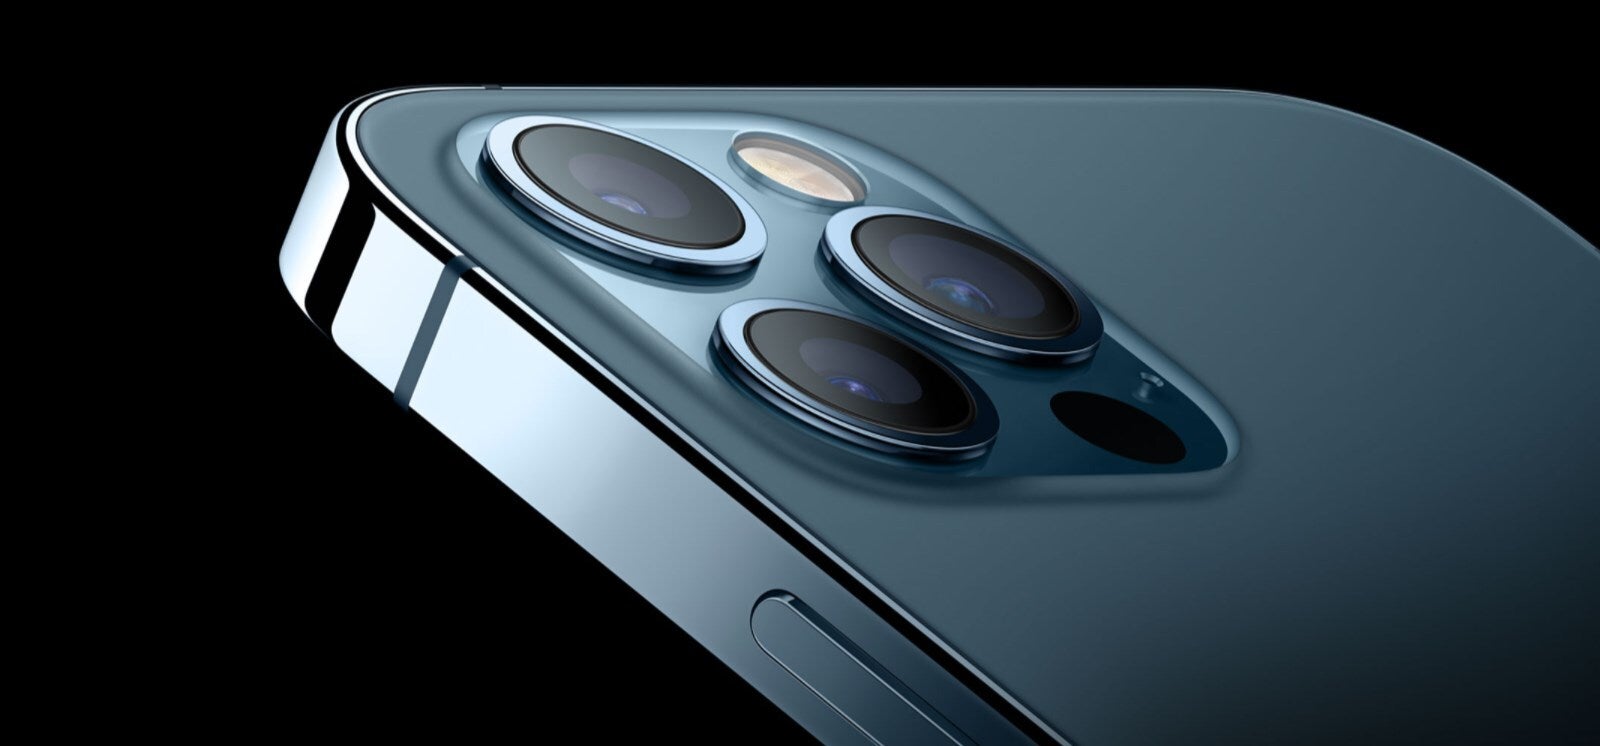 iPhone 12 Pro camera module - Apple iPhone 12 Pro/Max vs iPhone XS/Max